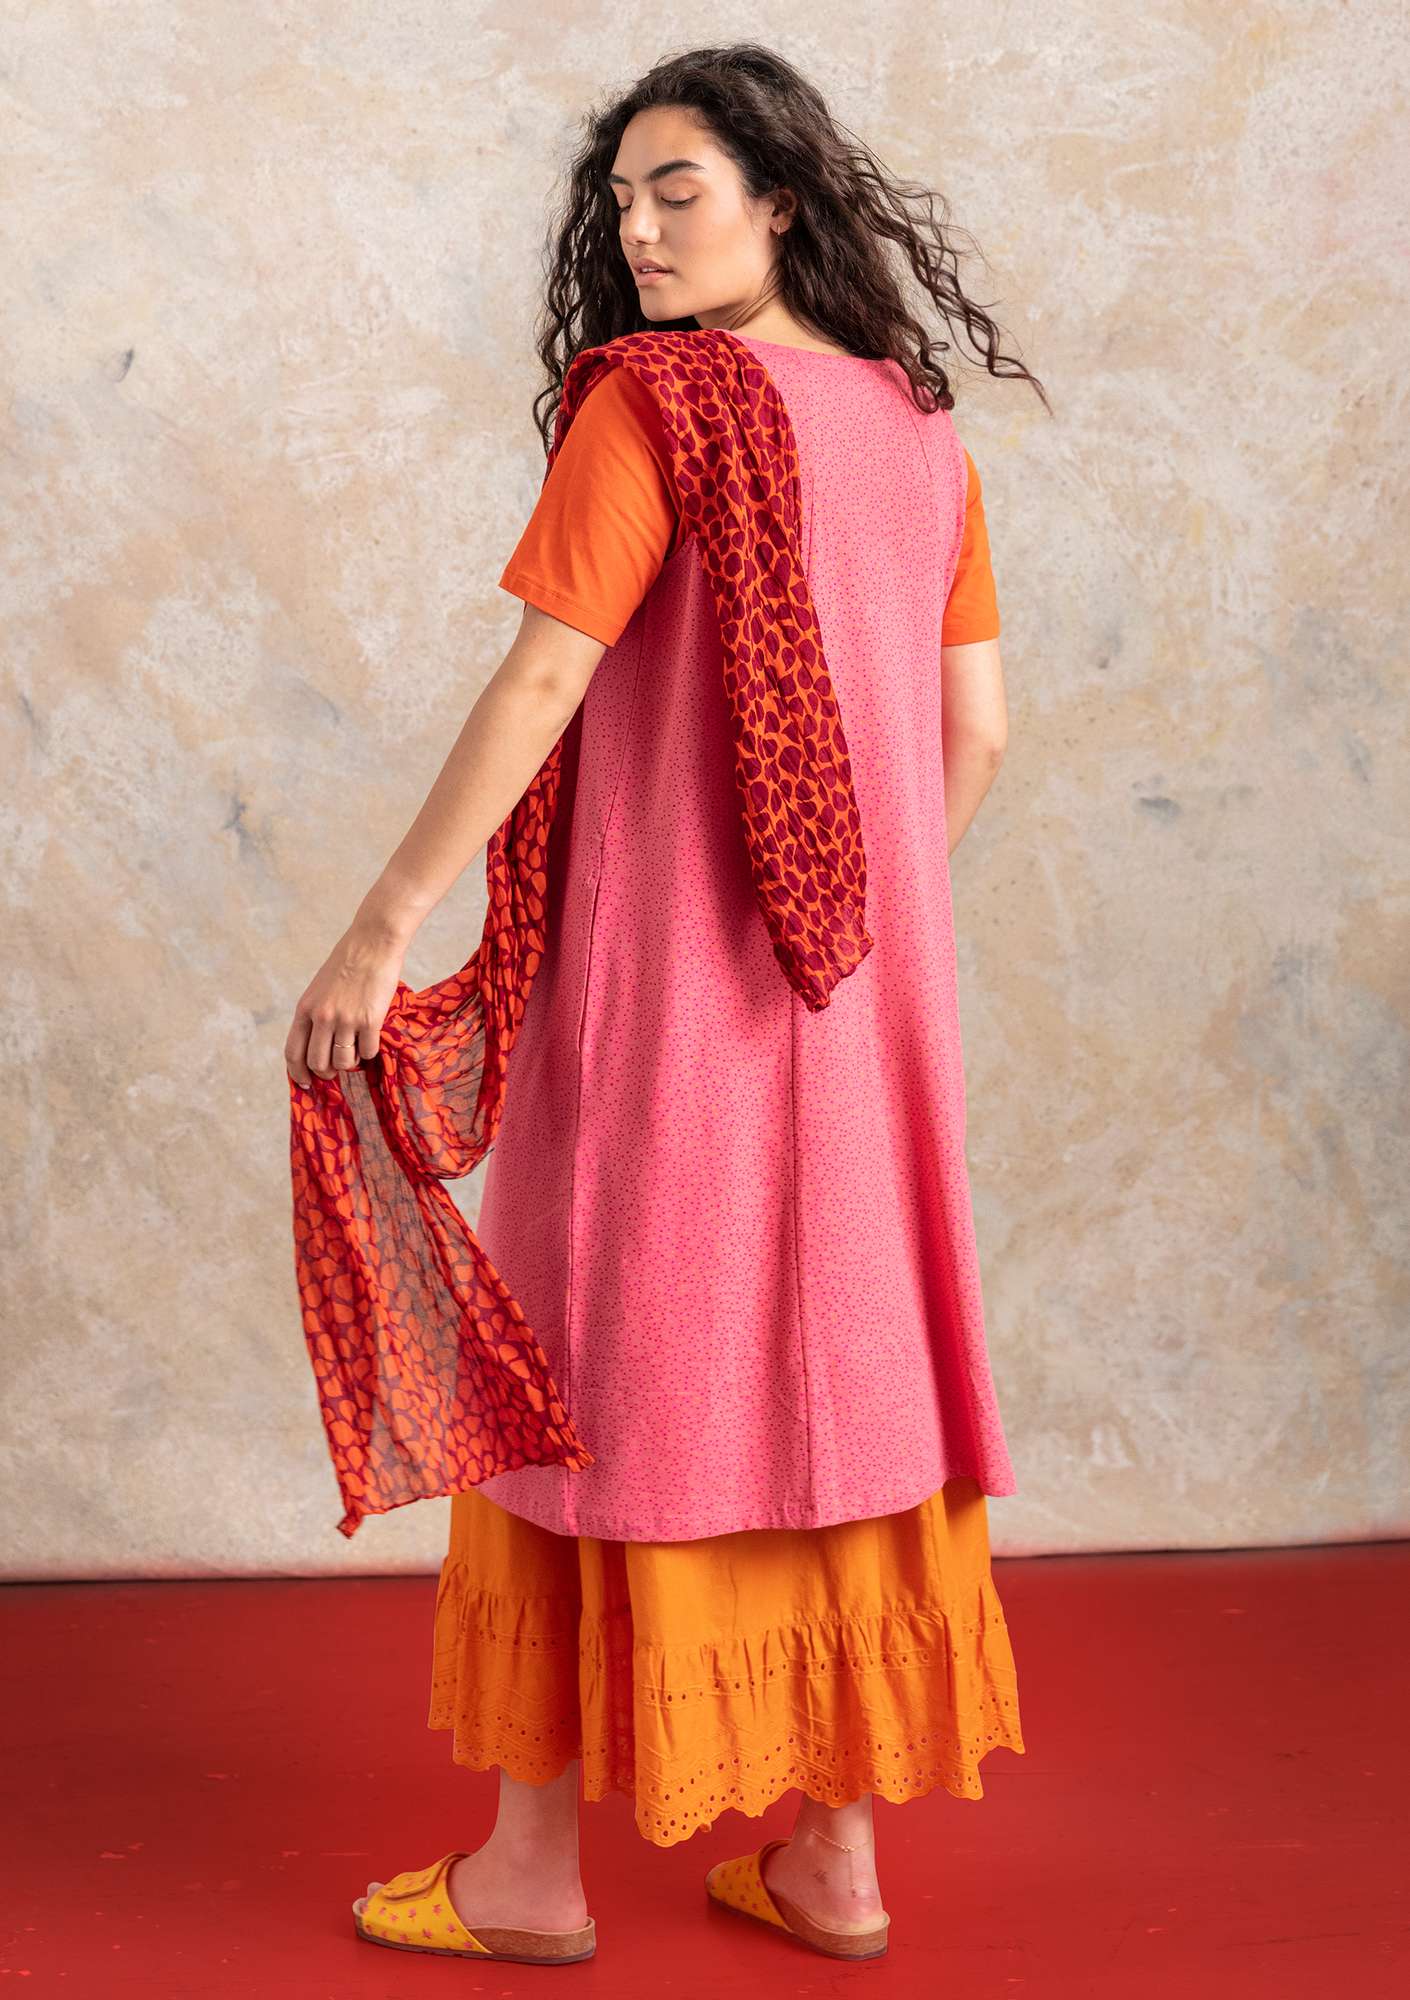 “Iliana” organic cotton/elastane jersey dress flamingo/patterned